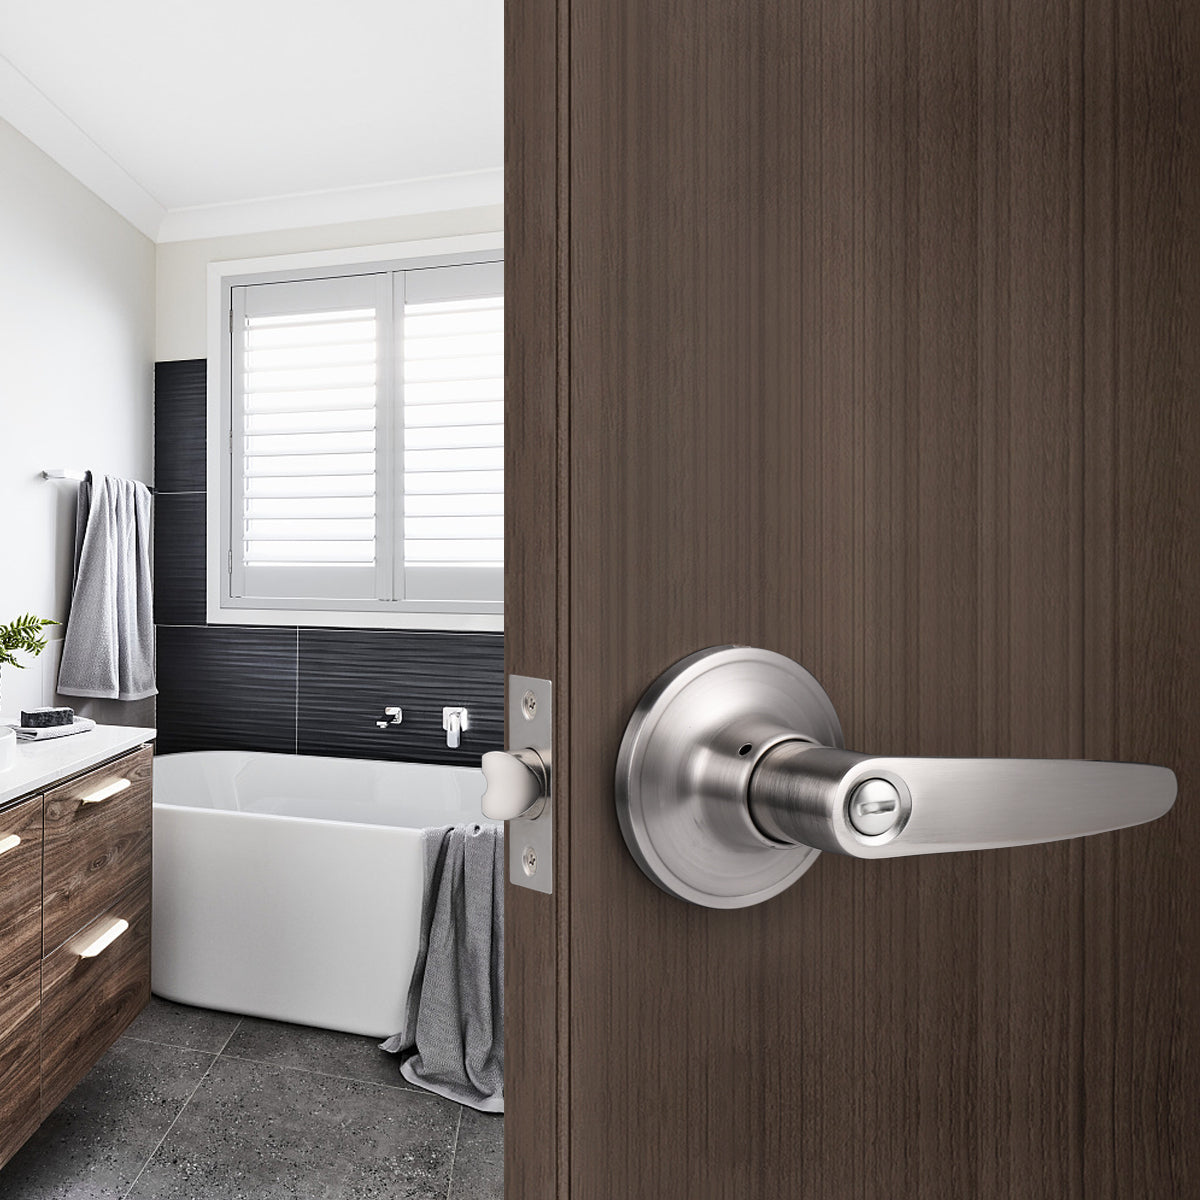 Leaf Style Door Lever, Satin Nickel Finish Bed/Bathroom Privacy Door Lock DL815SNBK - Probrico